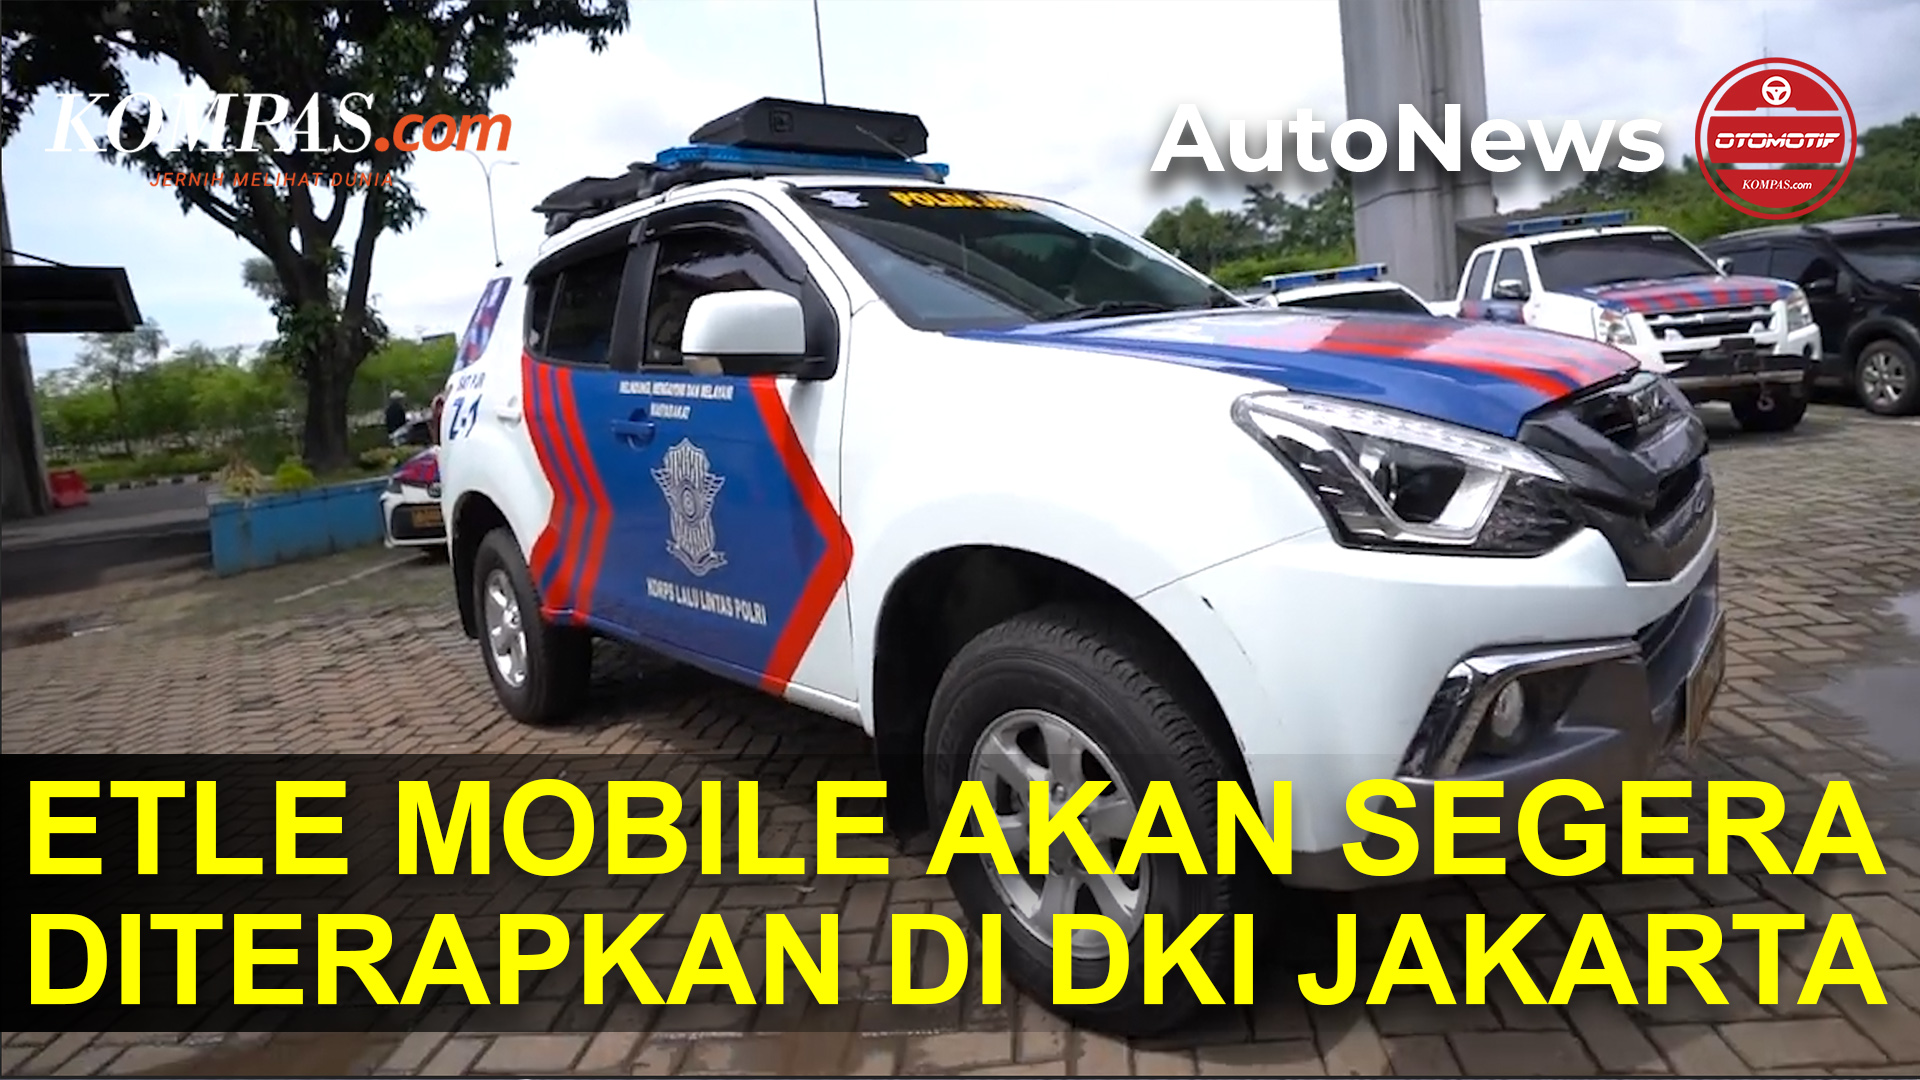 Hati-hati ETLE Mobile Bakal Diterapkan di DKI Jakarta